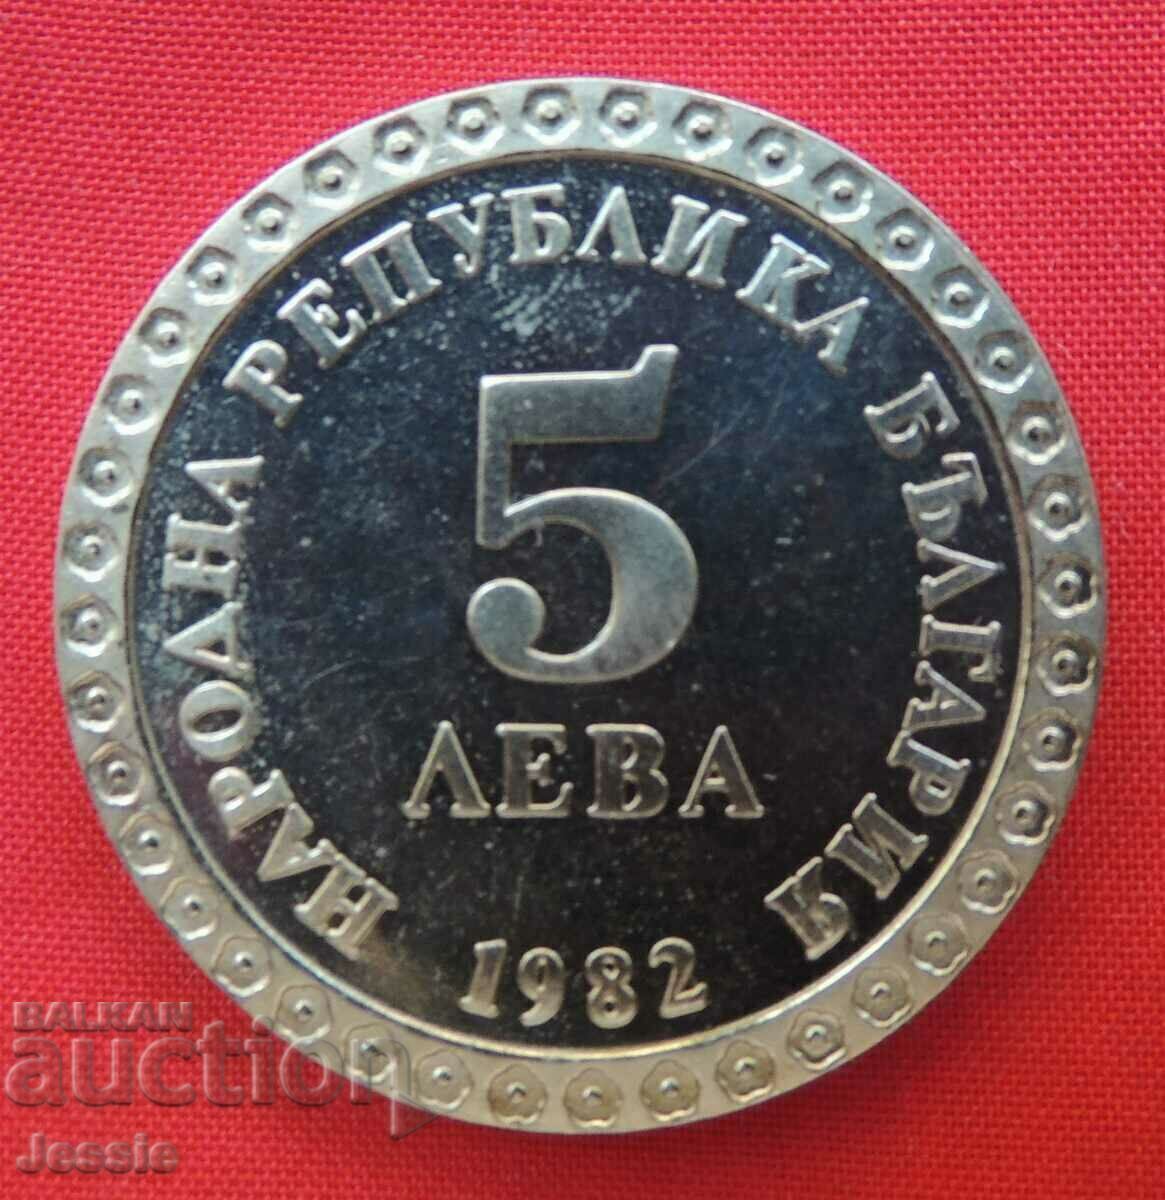 5 LV. 1982 Vladimir Dimitrov - Νομισματοκοπείο #2 ΕΞΑΝΤΛΗΜΕΝΟ ΣΕ BNB